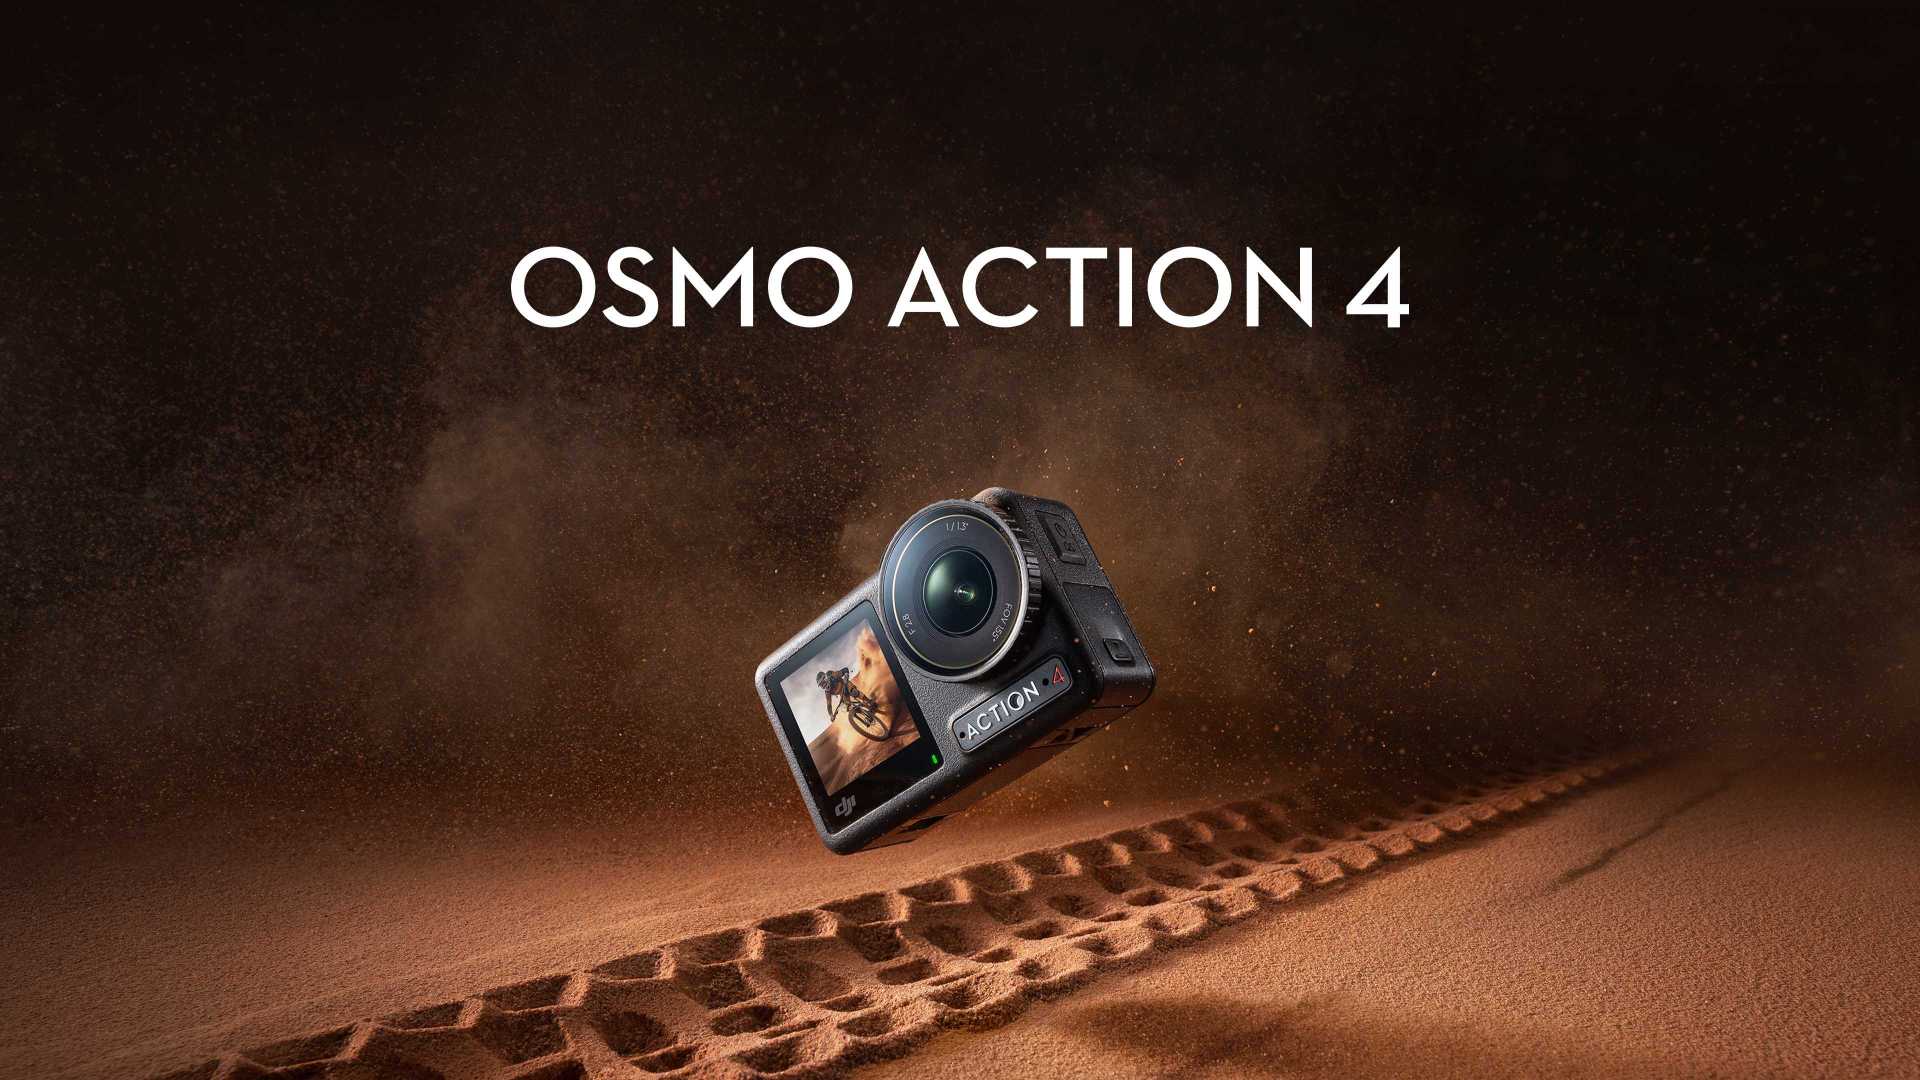 大疆发布旗舰画质运动相机 Osmo Action 4